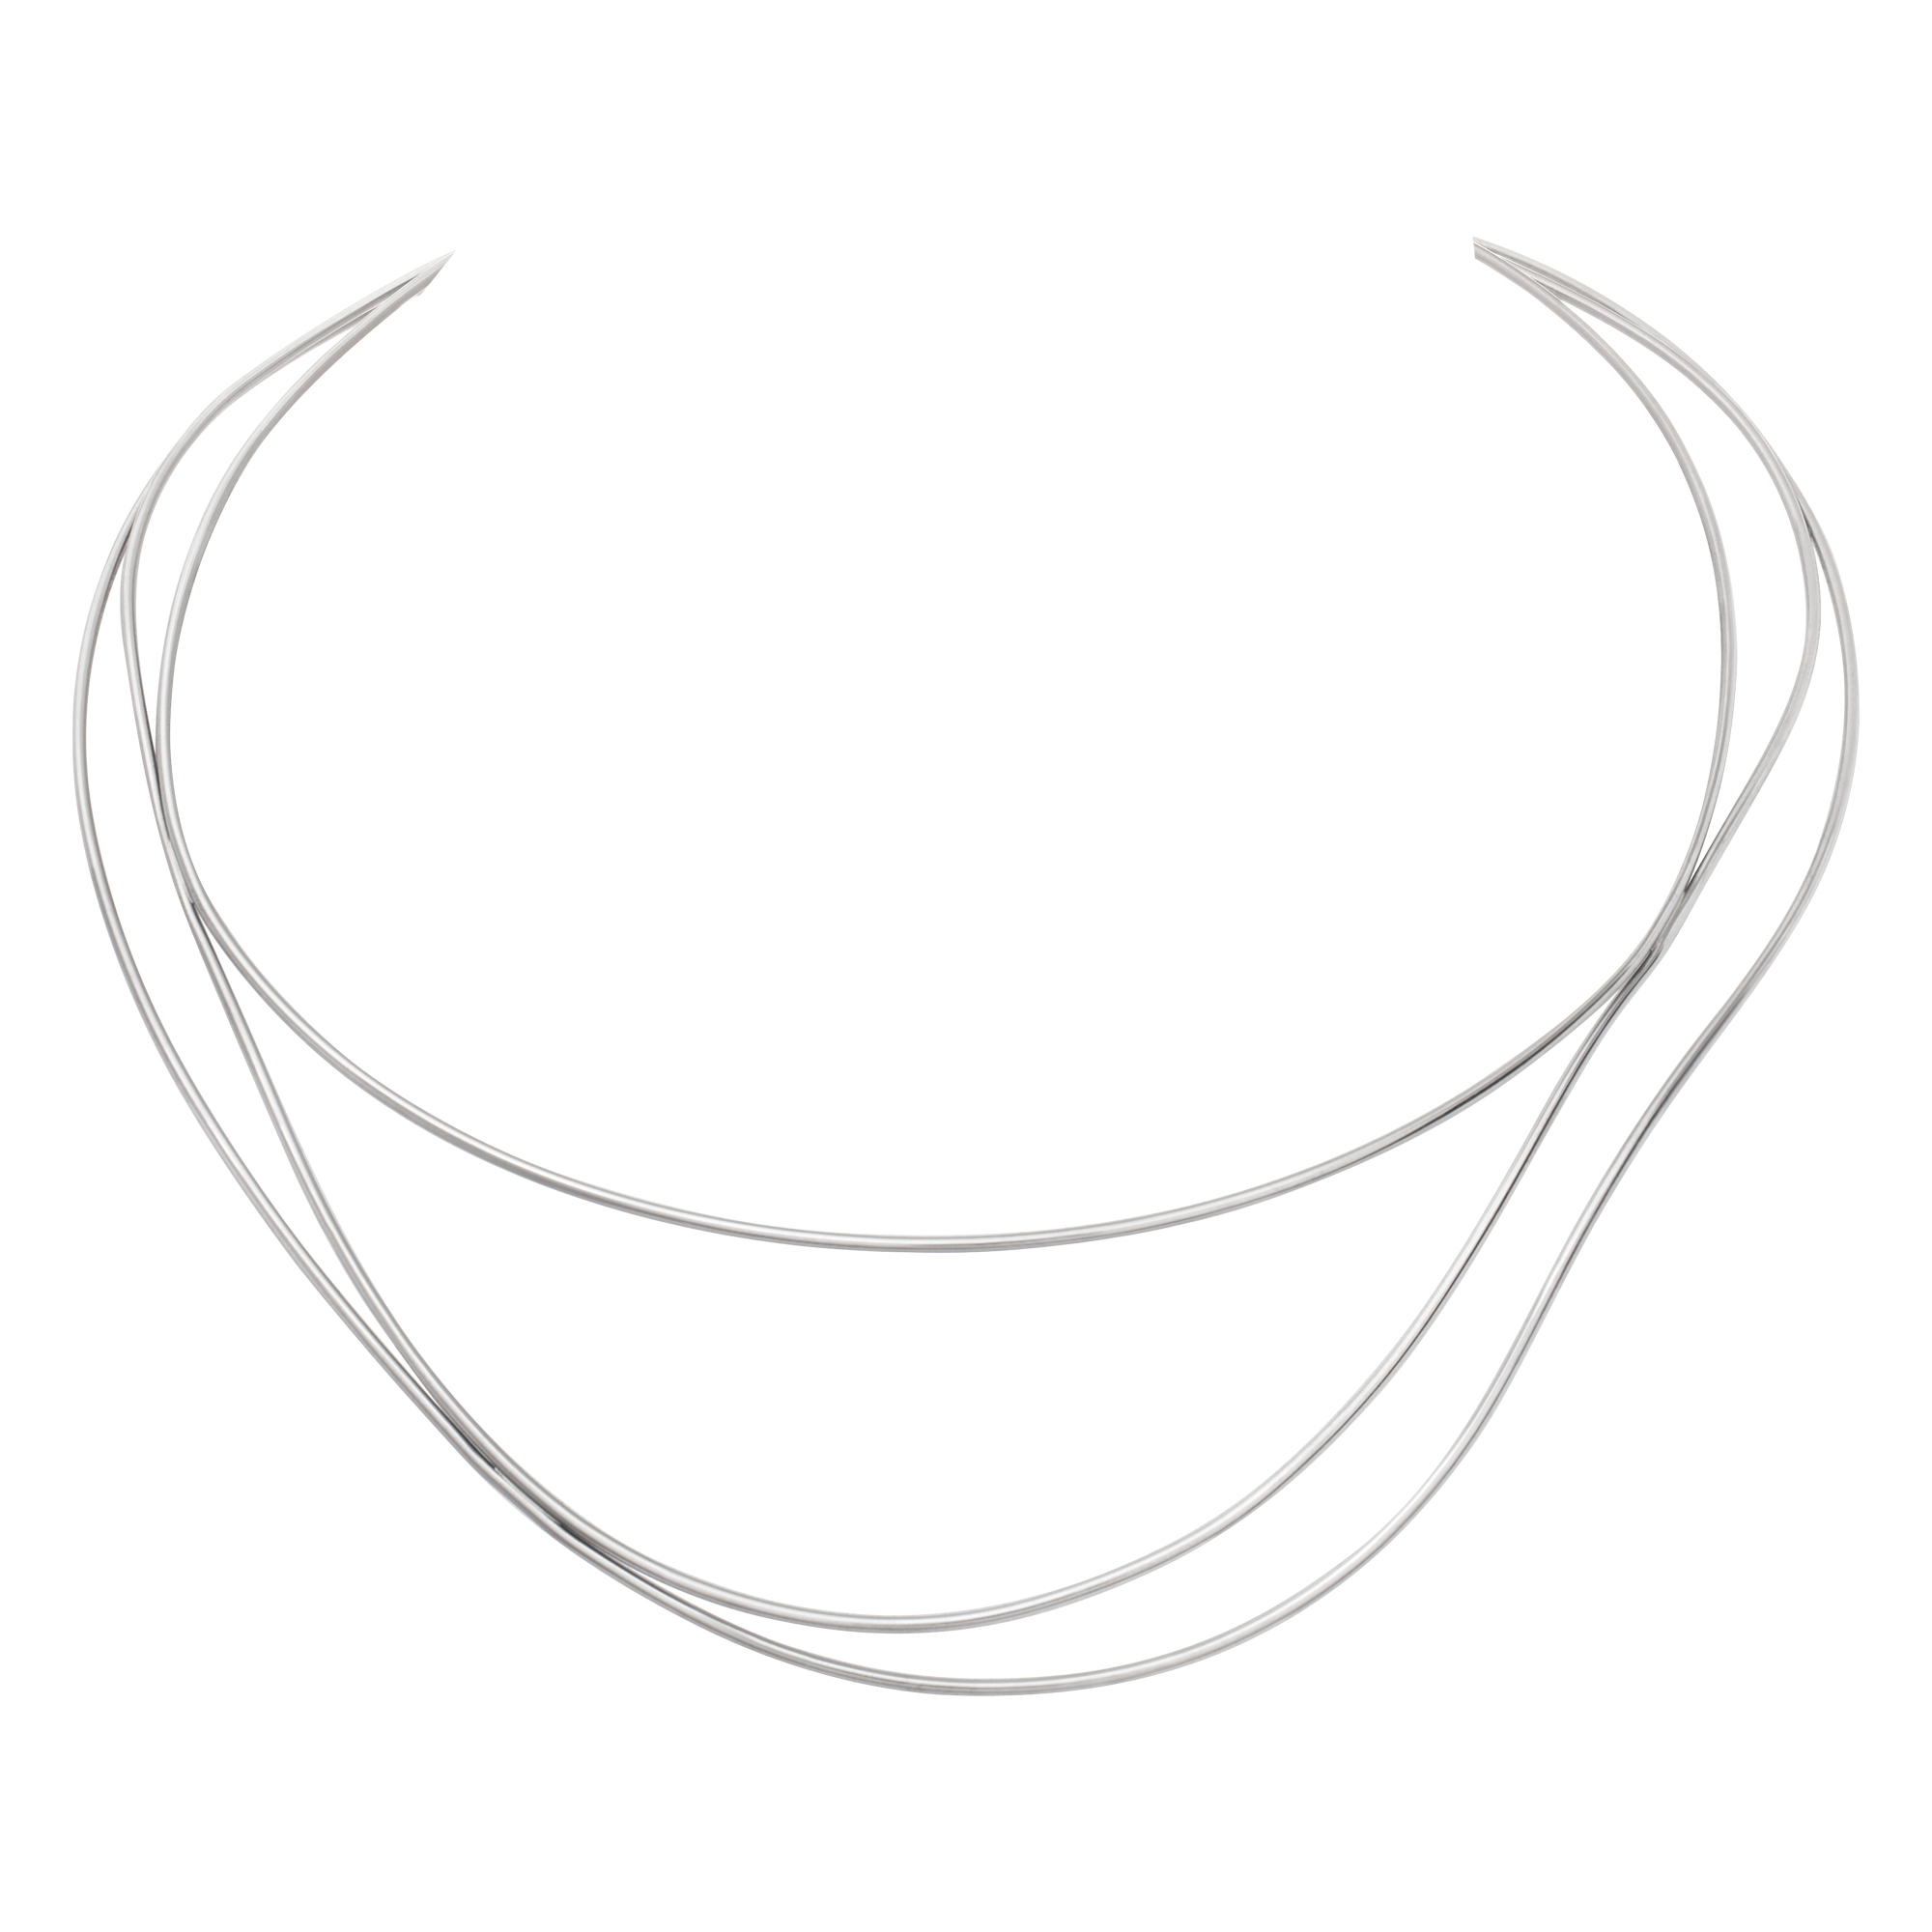 Tiffany & Co. Elsa Peretti "Wave Collection" triple 18k white gold "line" necklace.